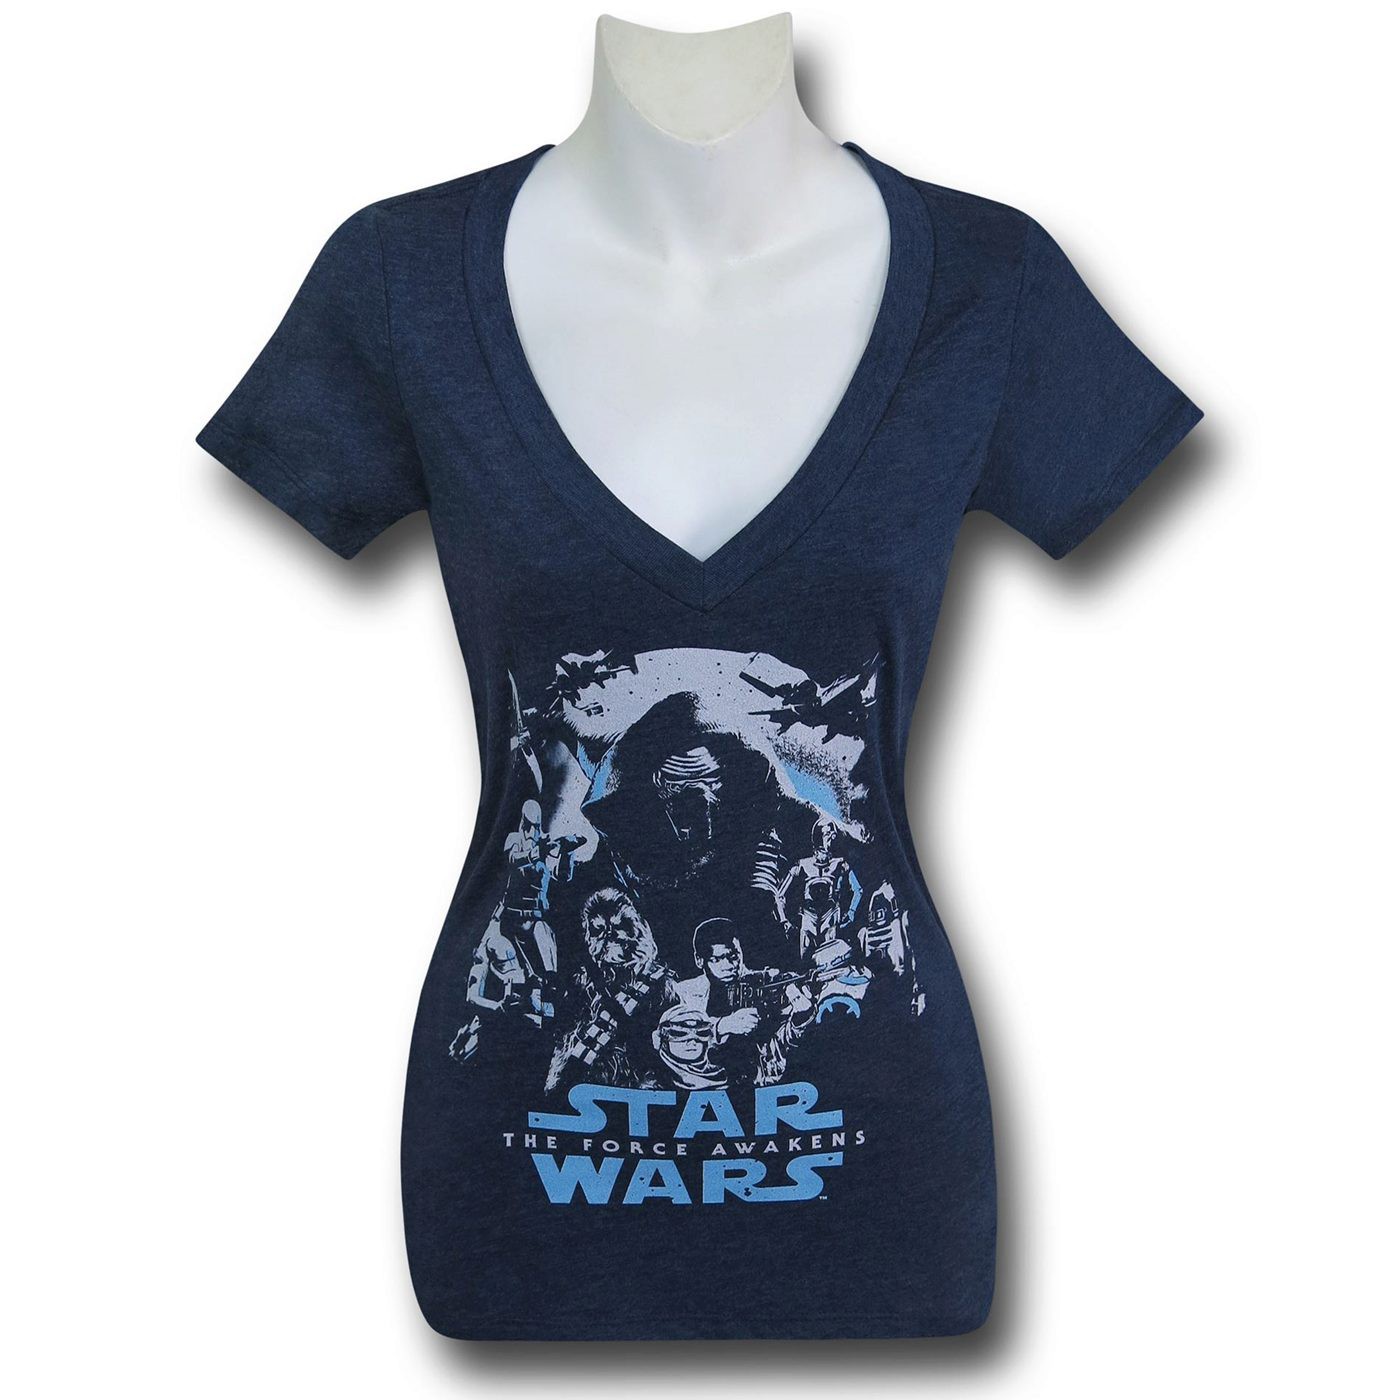 Star Wars Force Awakens United Women's T-Shirt